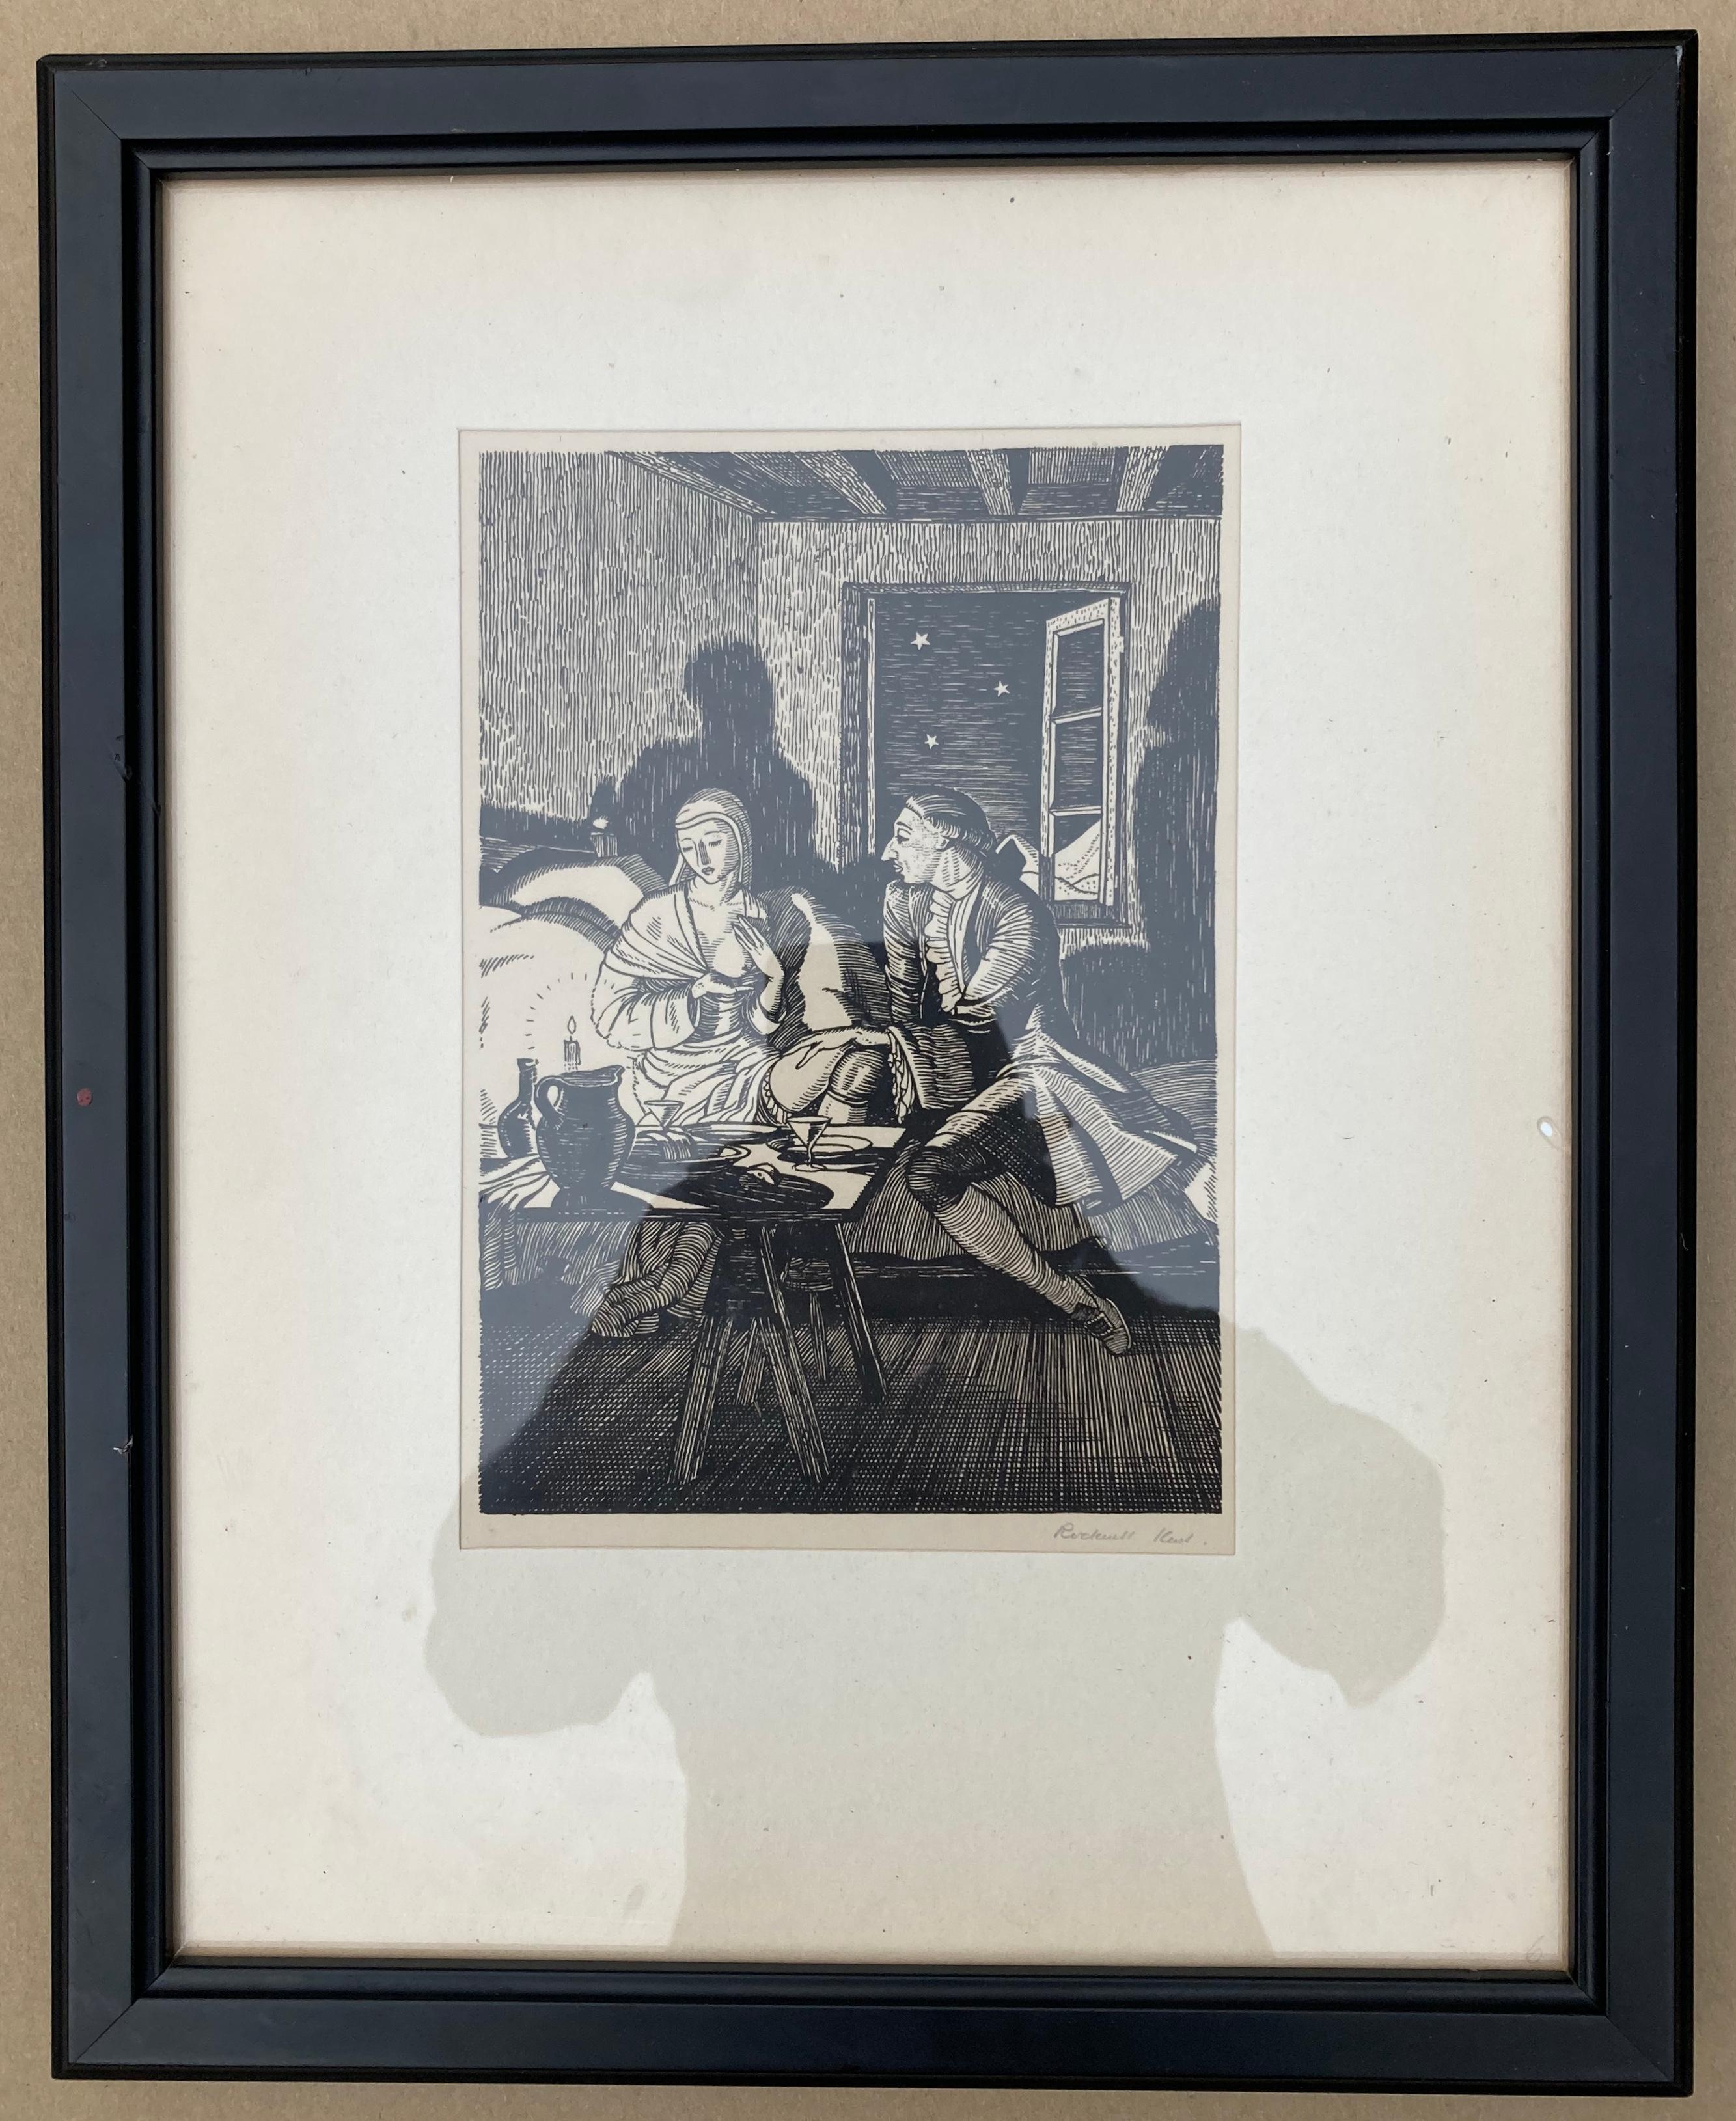 CASANOVA - rare signed impression - American Modern Print by Rockwell Kent